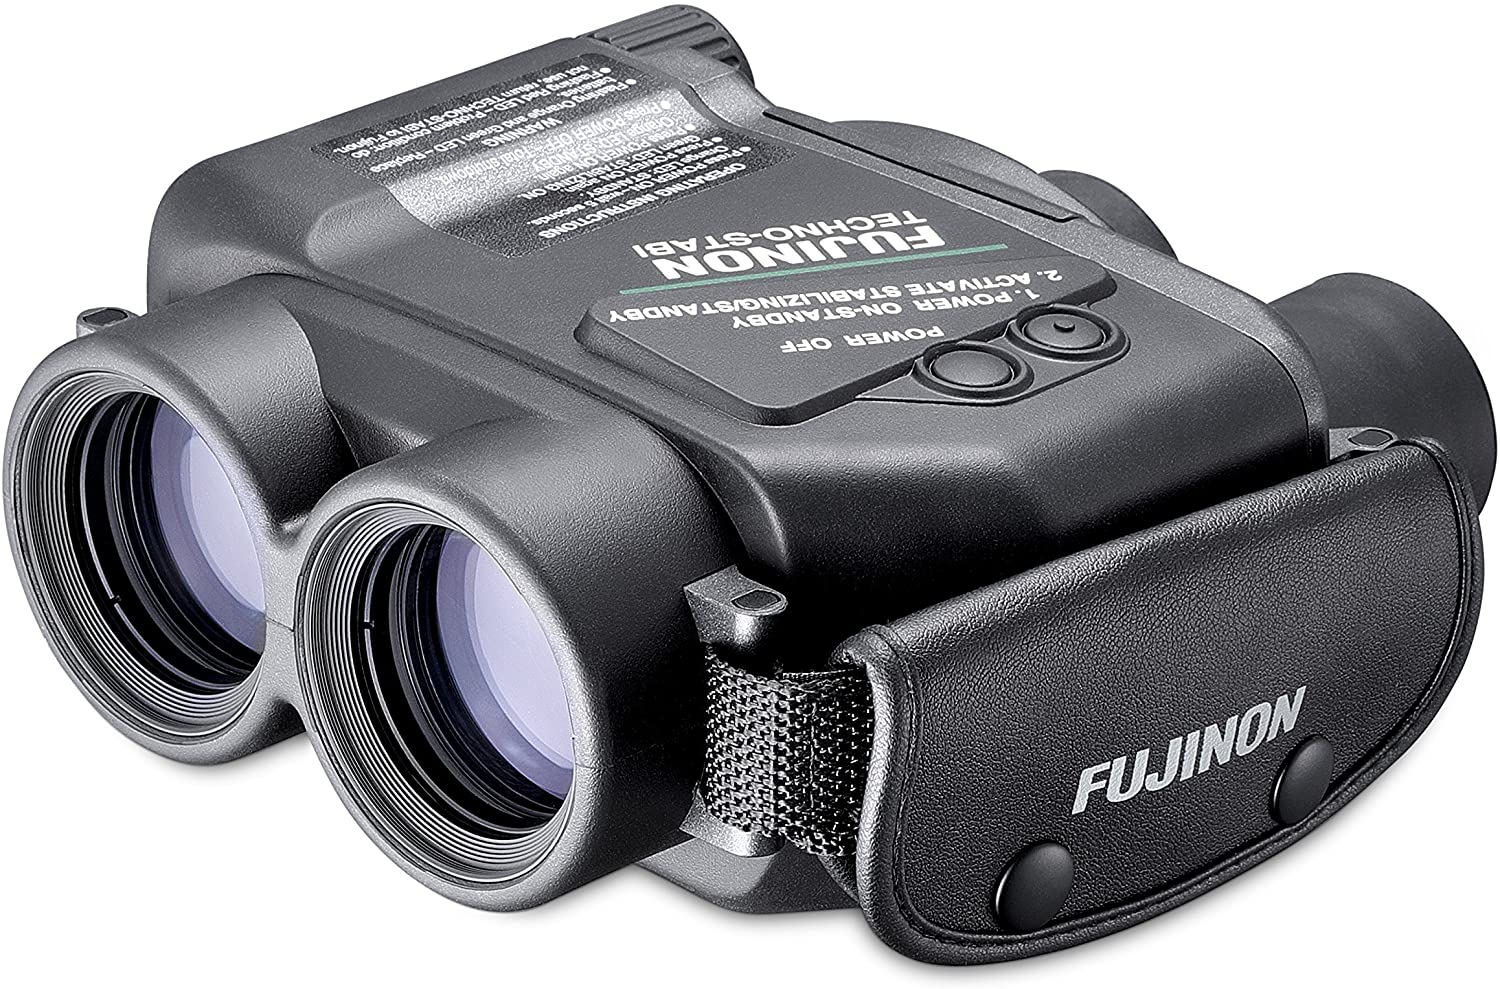 Fujinon Techno Stabi TS1440 Image Stabilized Binoculars